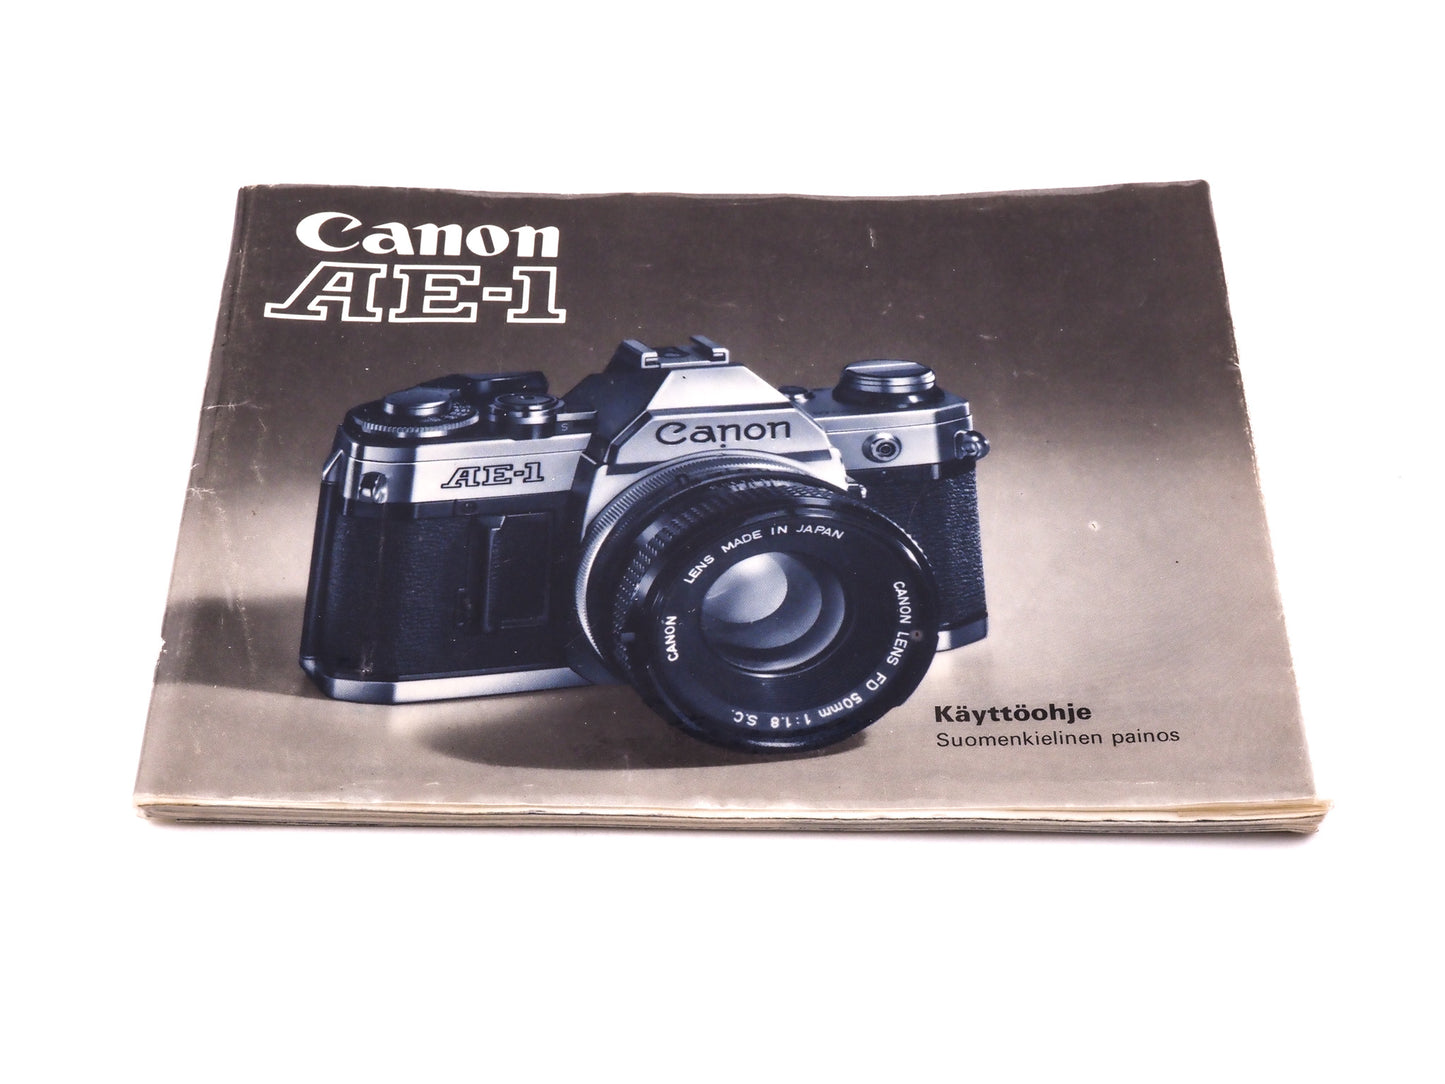 Canon AE-1 Instructions